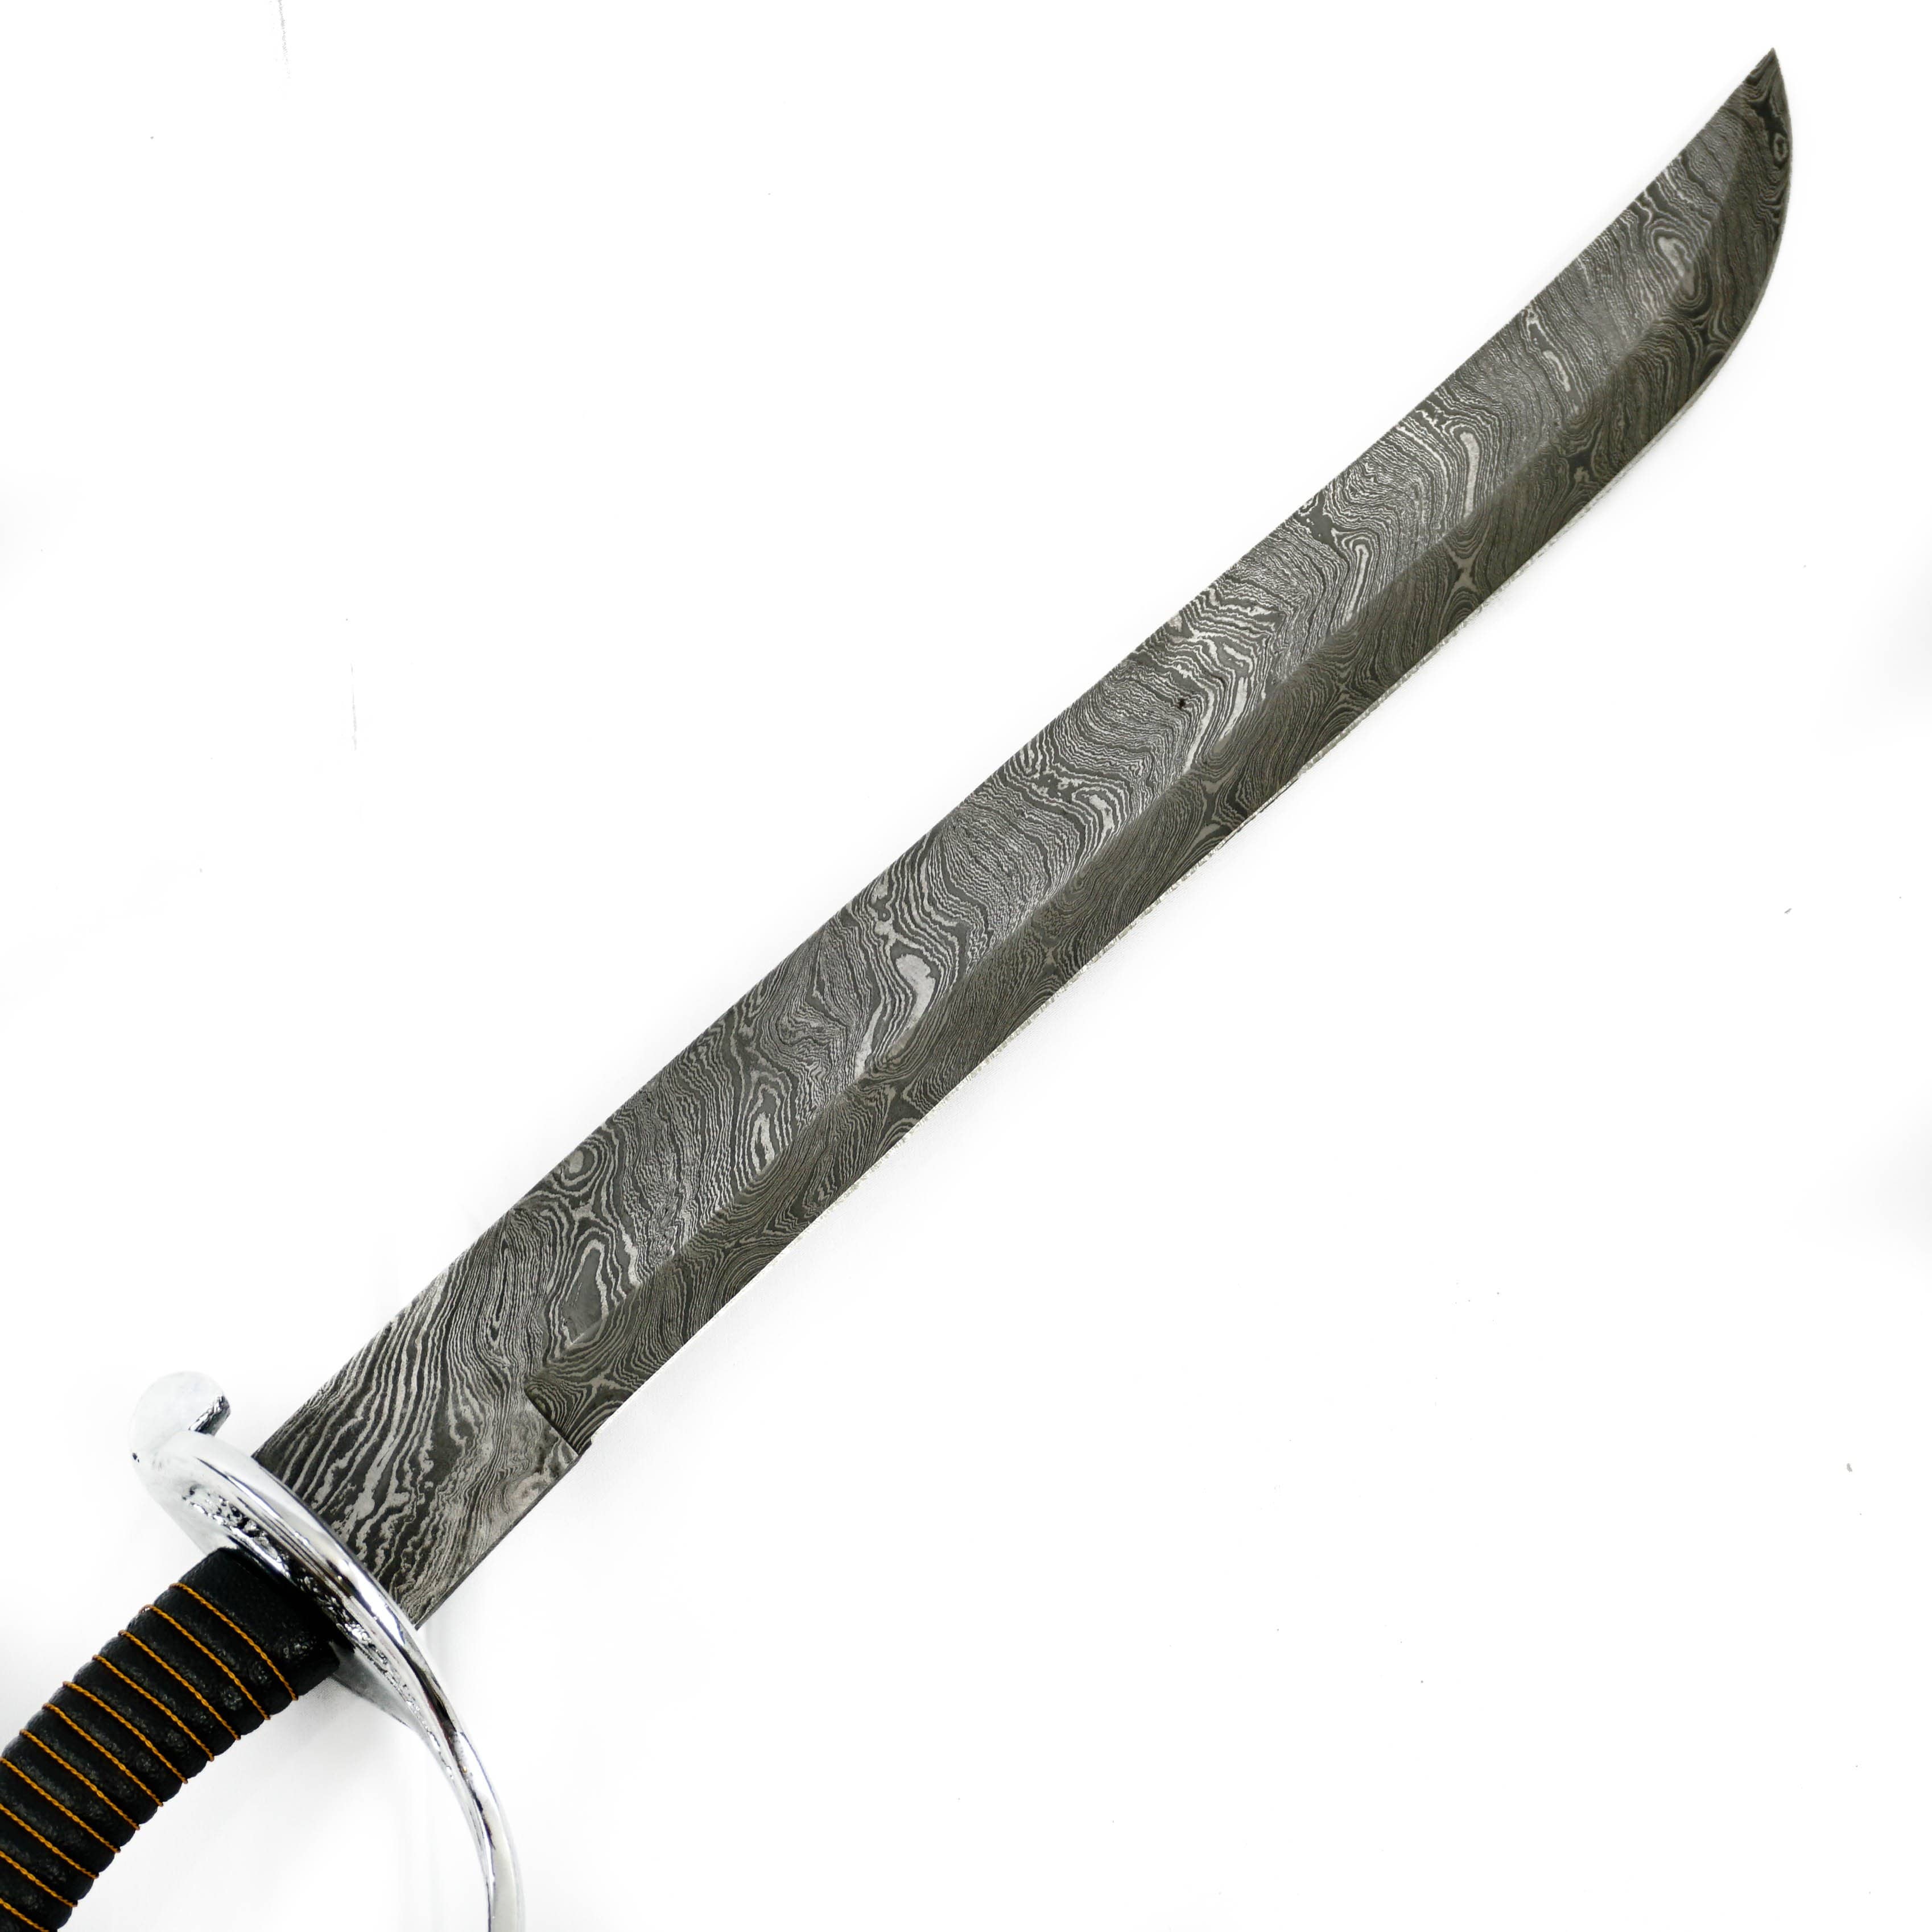 Cutlass Sword For Sale- Hand Crafted High Carbon Damascus Wootz